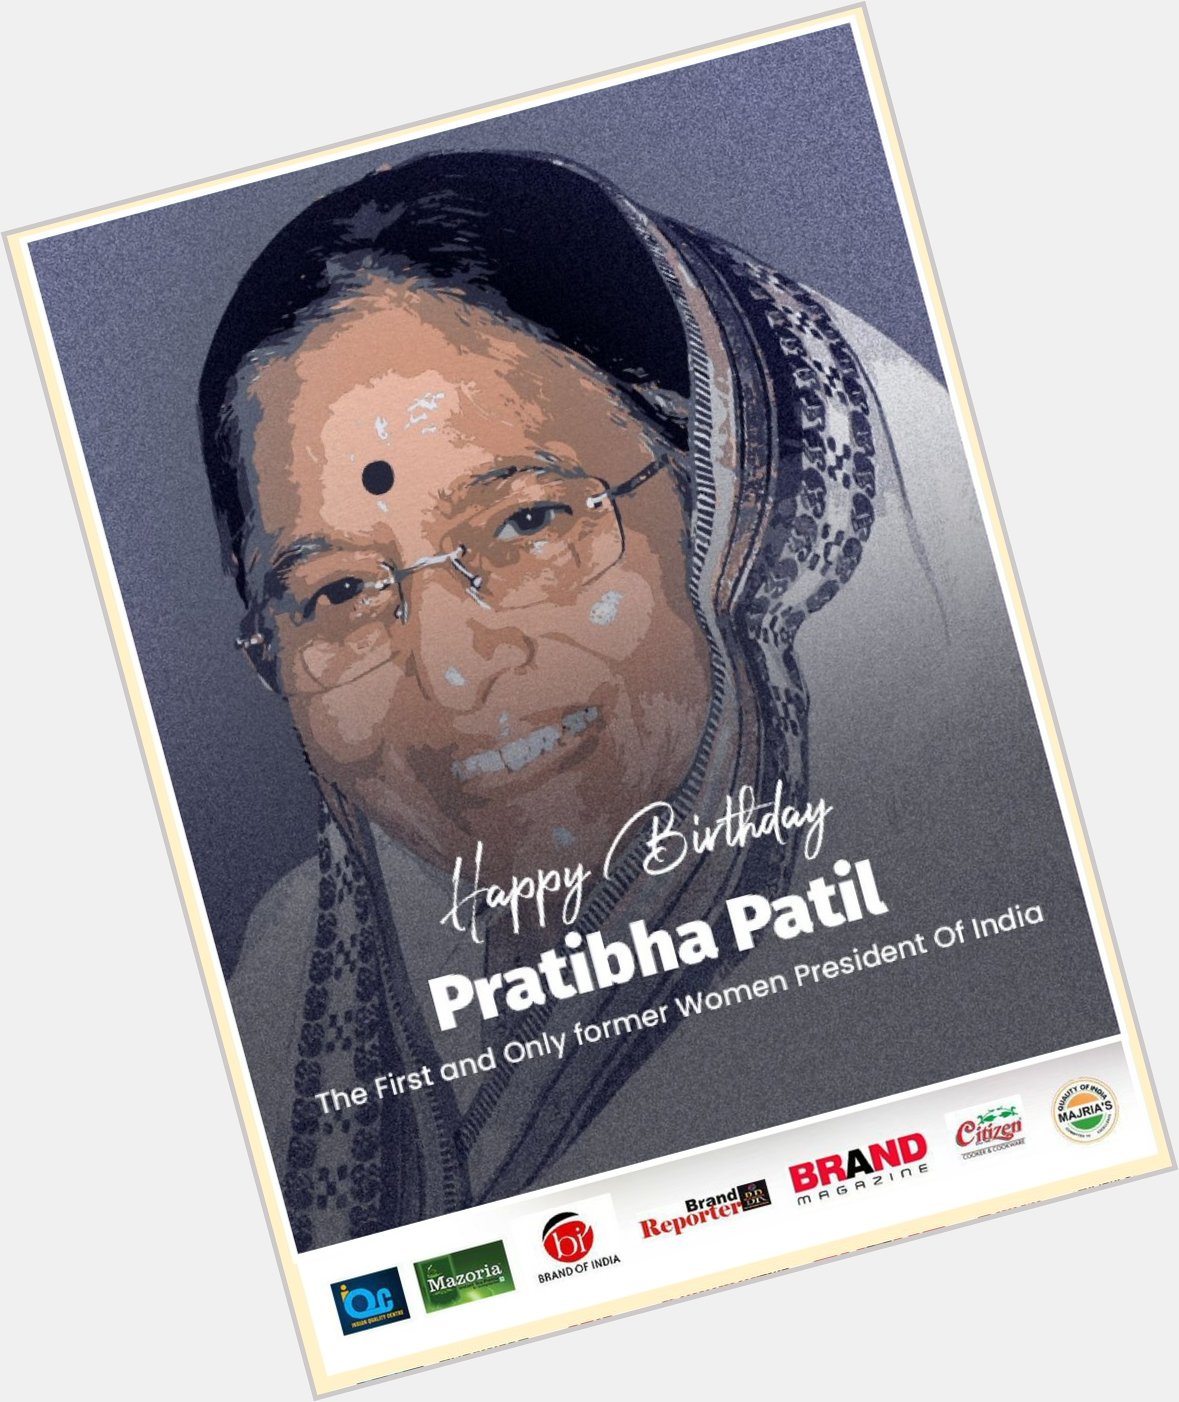 Happy Birthday to Pratibha Patil   .
.
Like  follow  and share 